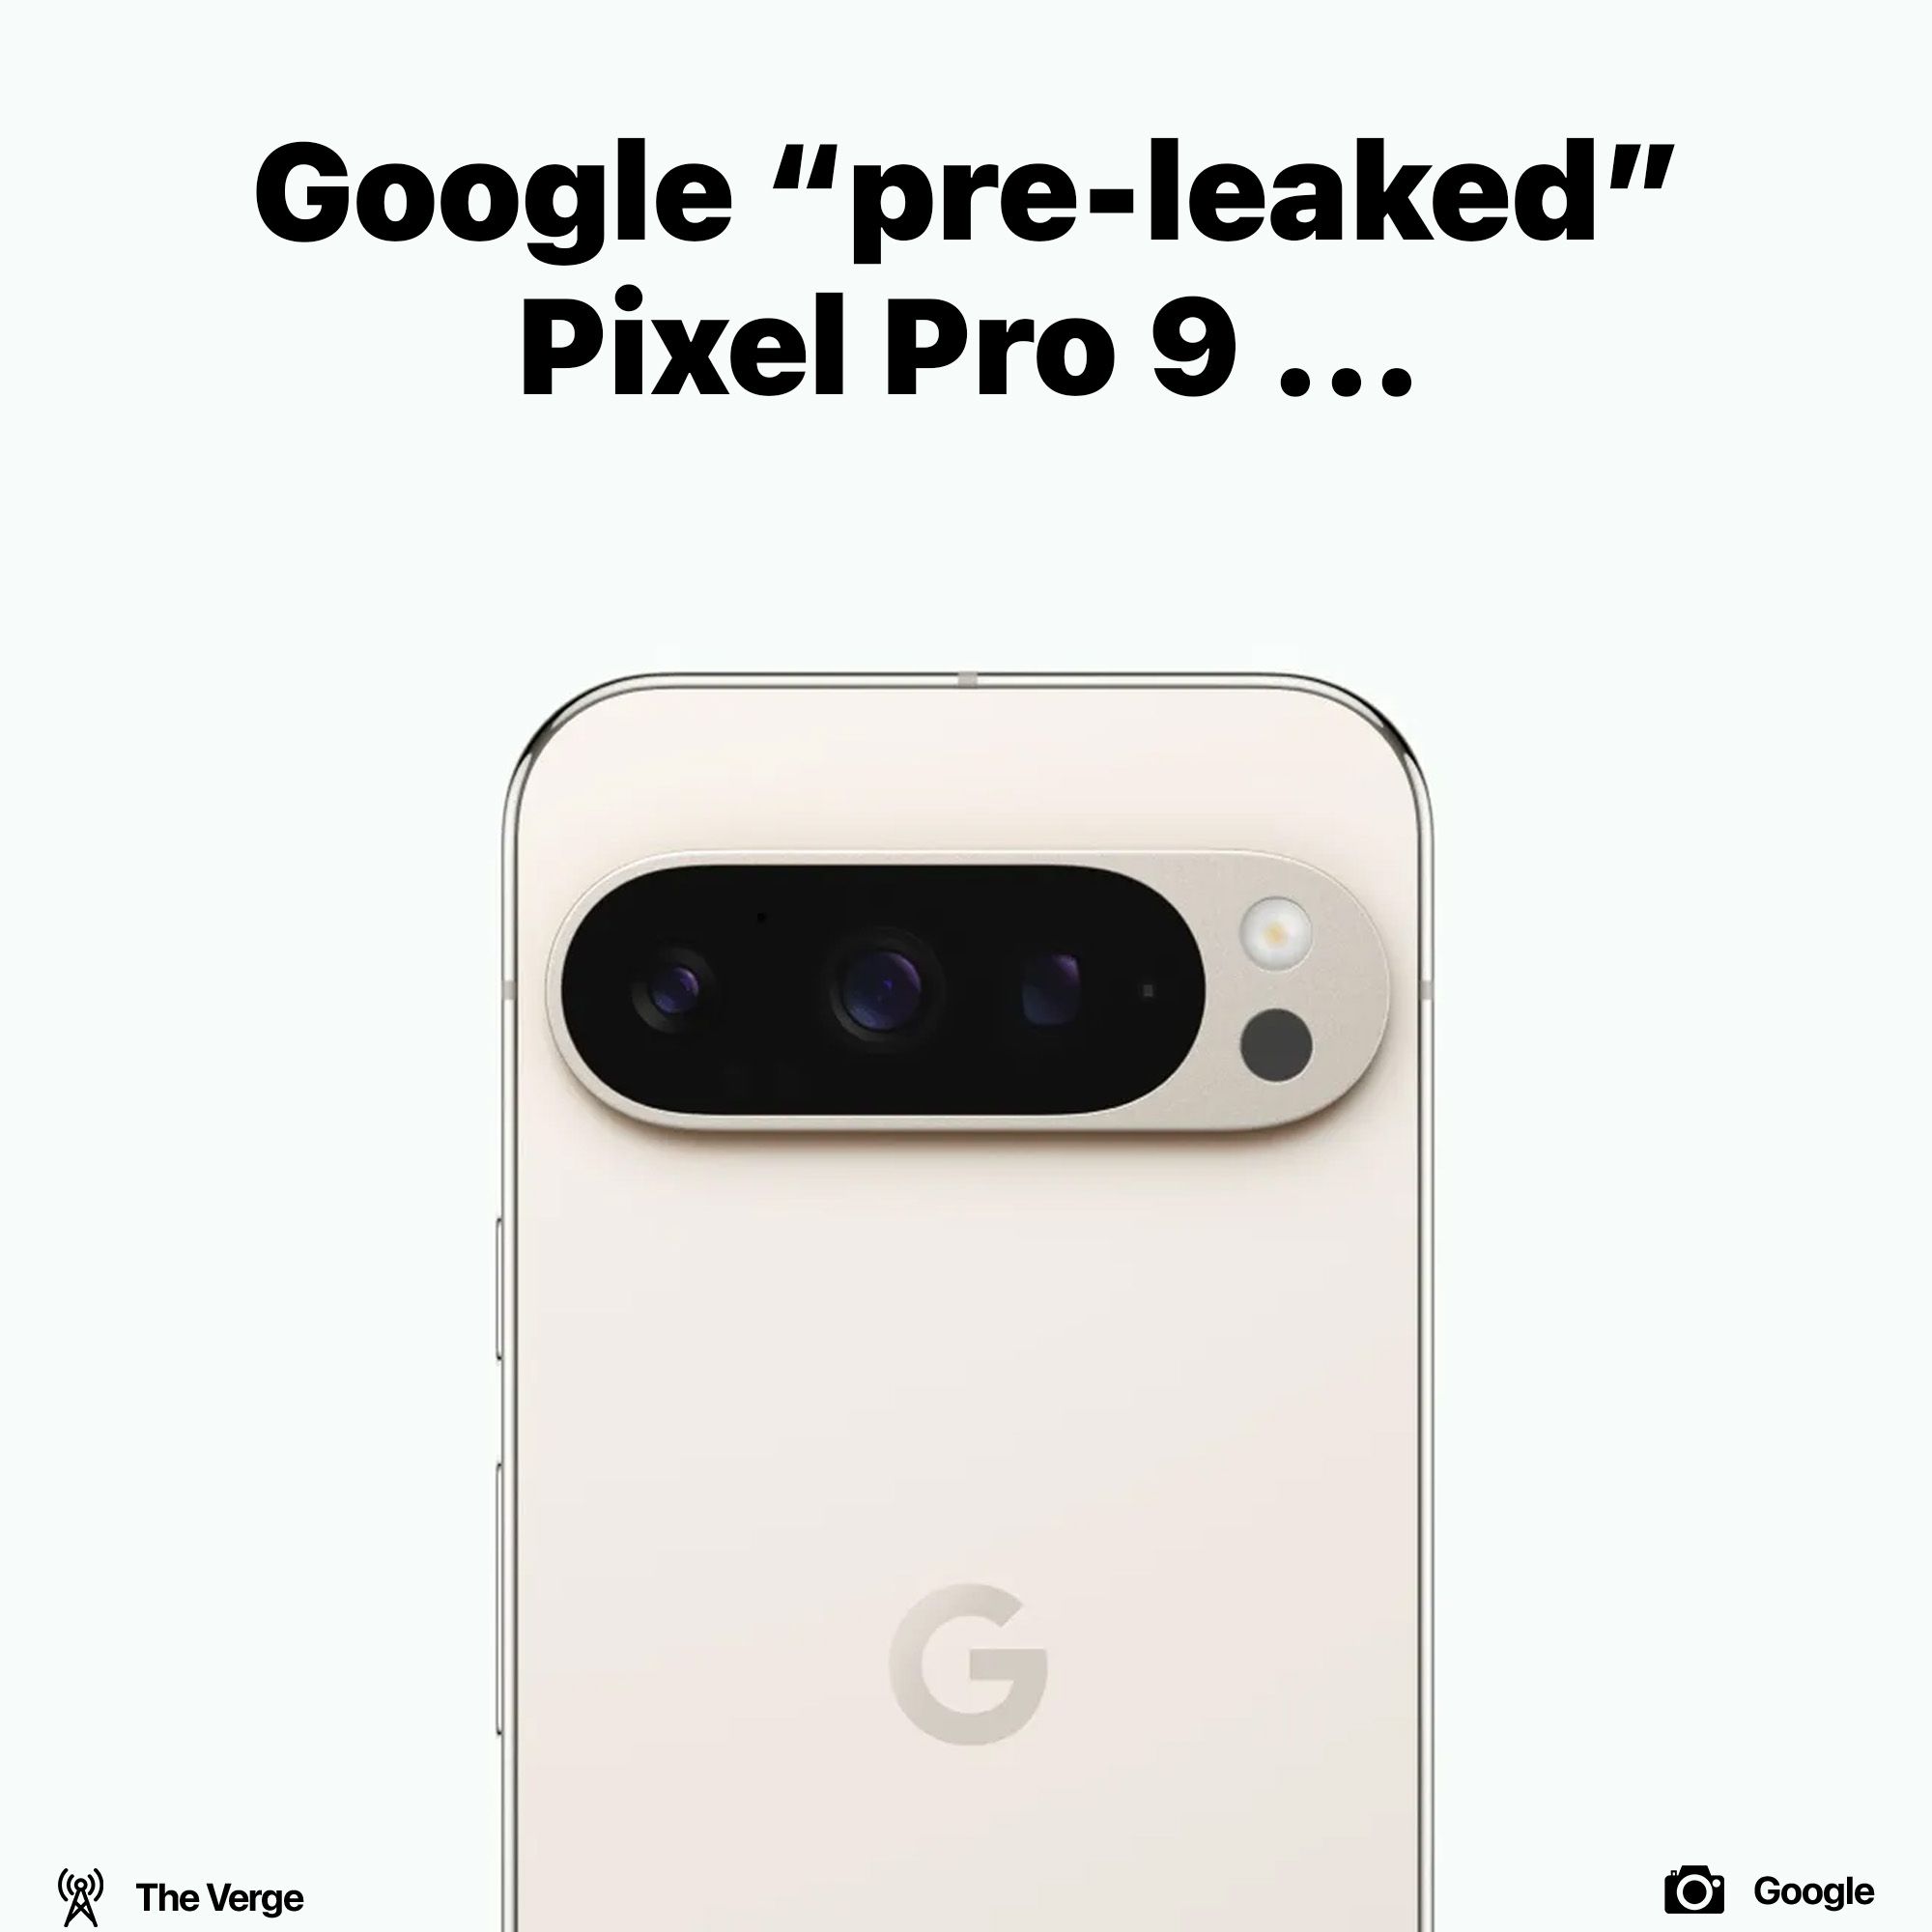 Google teases Pixel Pro 9